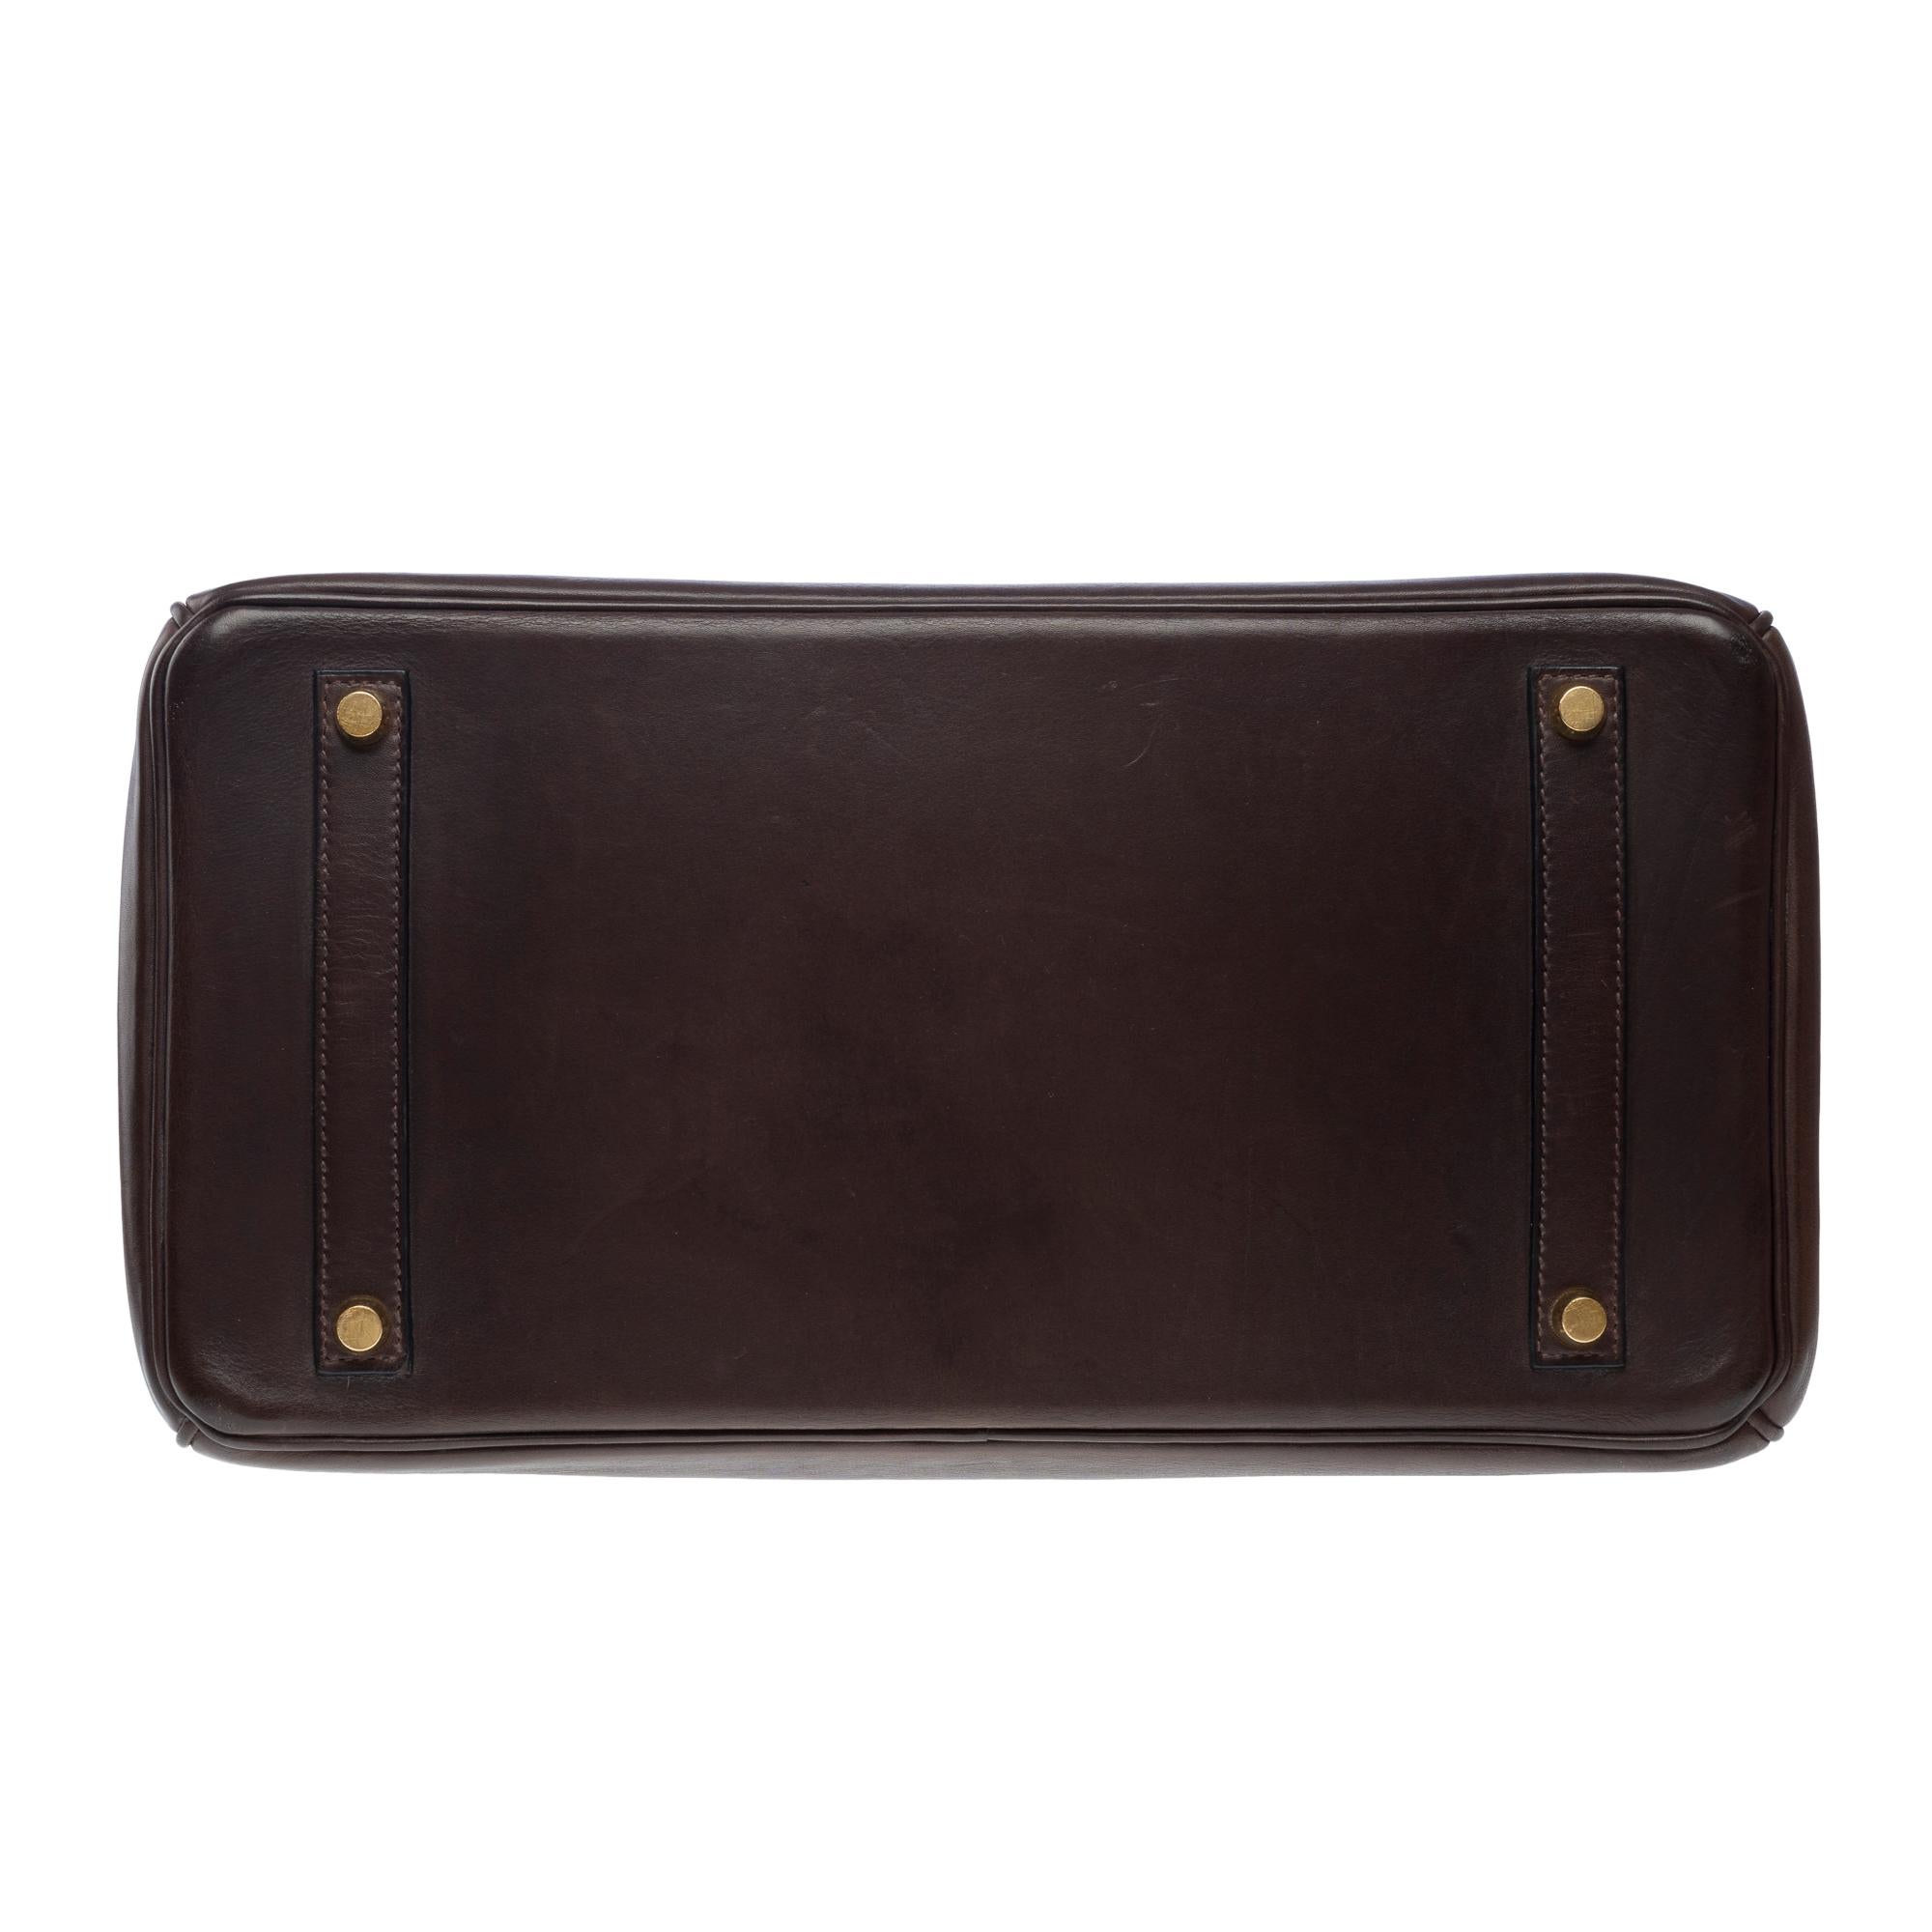 Rare & Exceptional Hermès Birkin 35 handbag in Ebony Brown Barenia leather, GHW For Sale 6